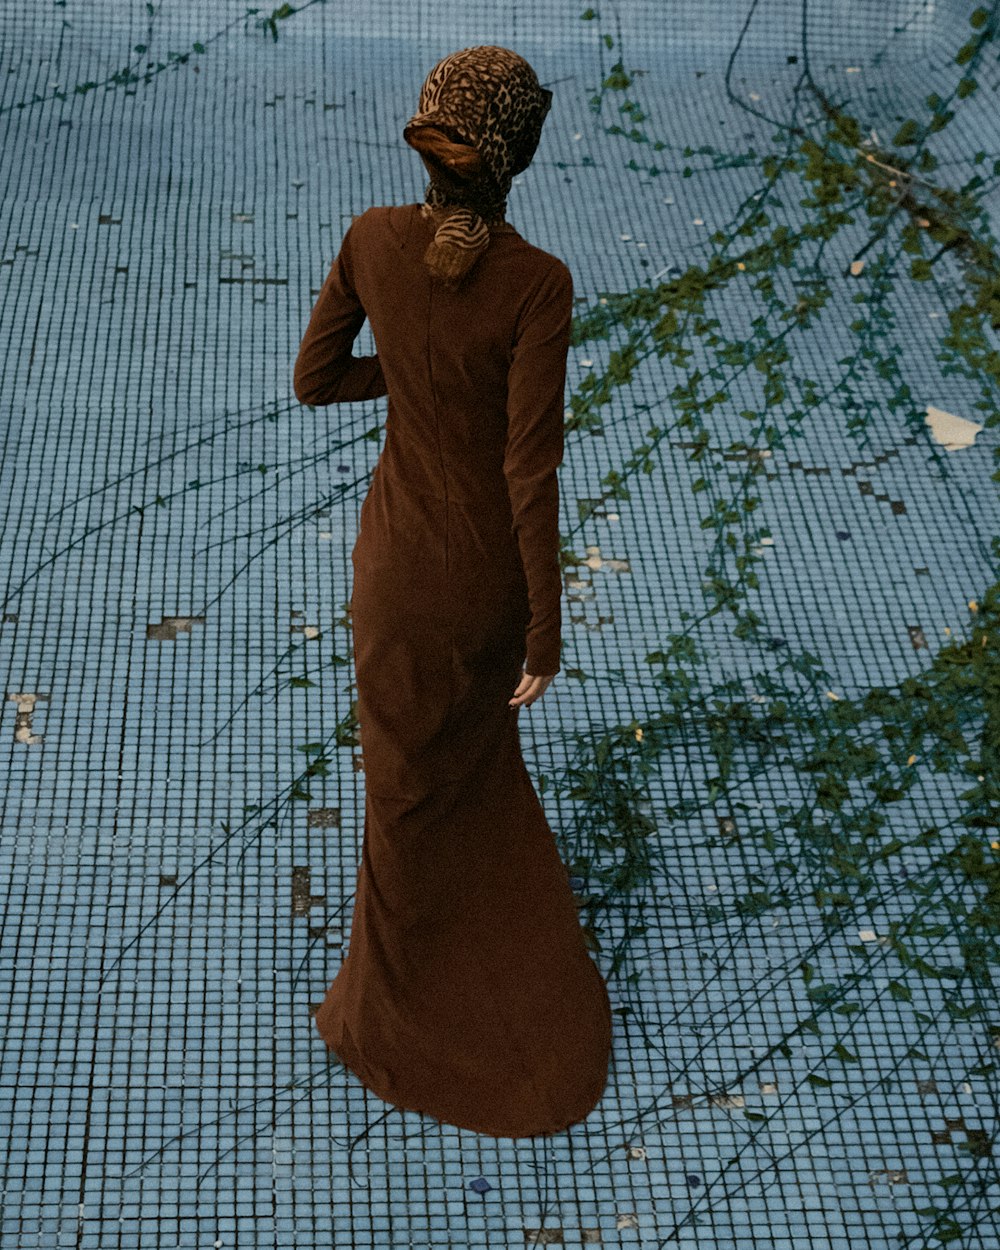 Une femme en robe marron marche